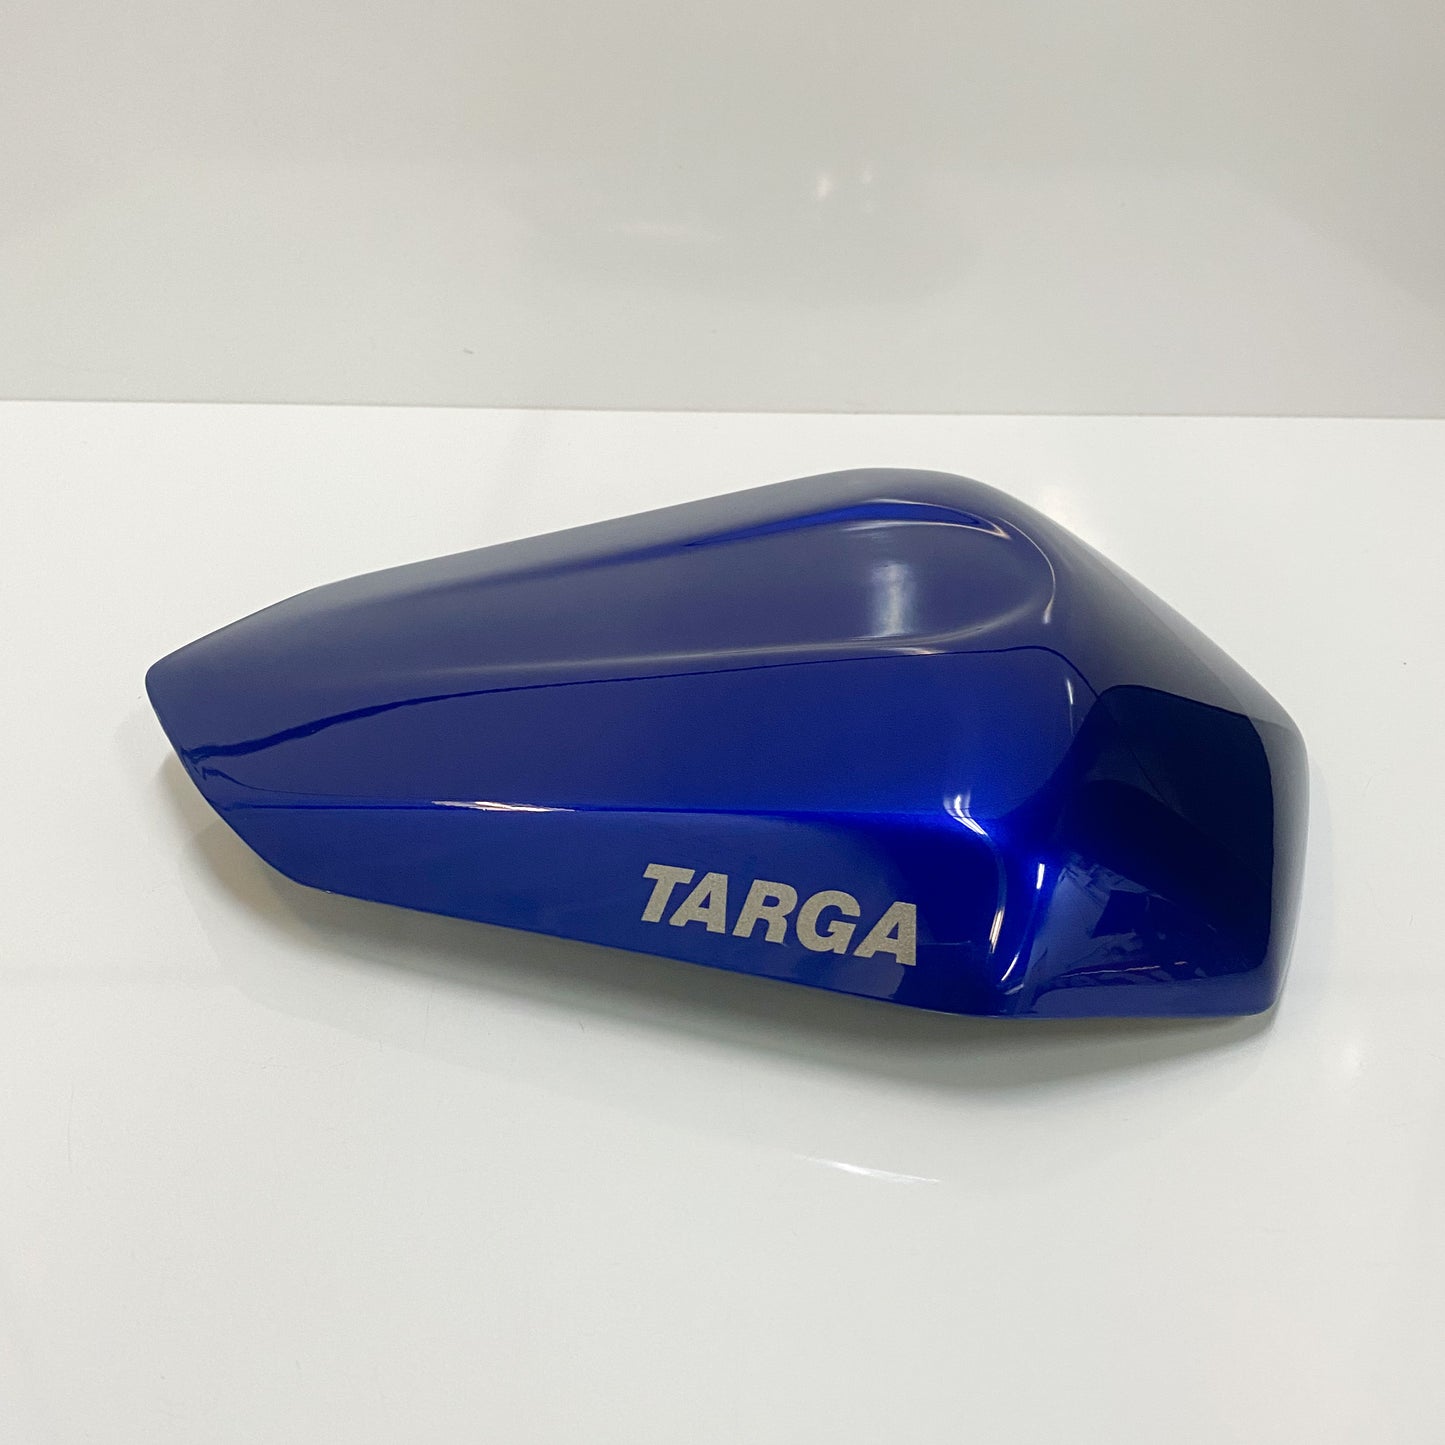 Targa Seat Cowl Yamaha R6 '06 Metallic Blue  25-231 NOS